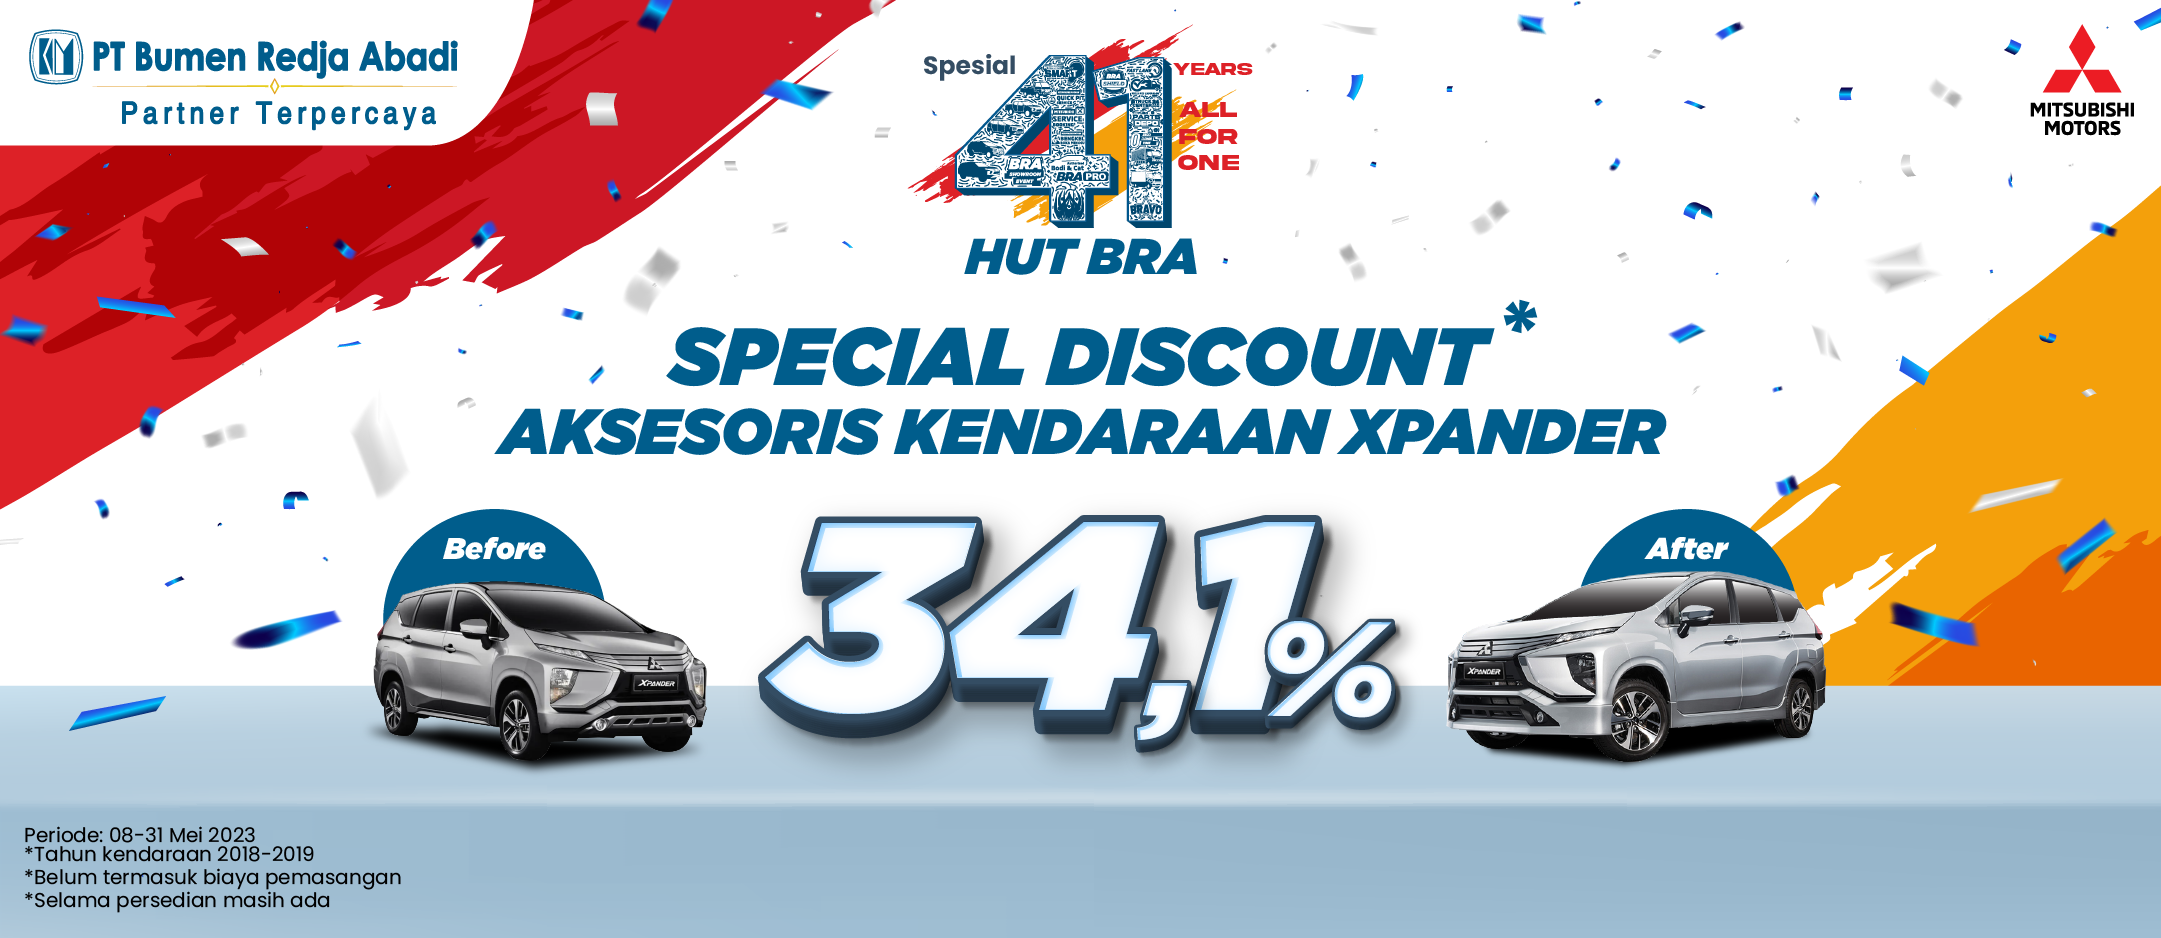 Special Discount Aksesoris Xpander 